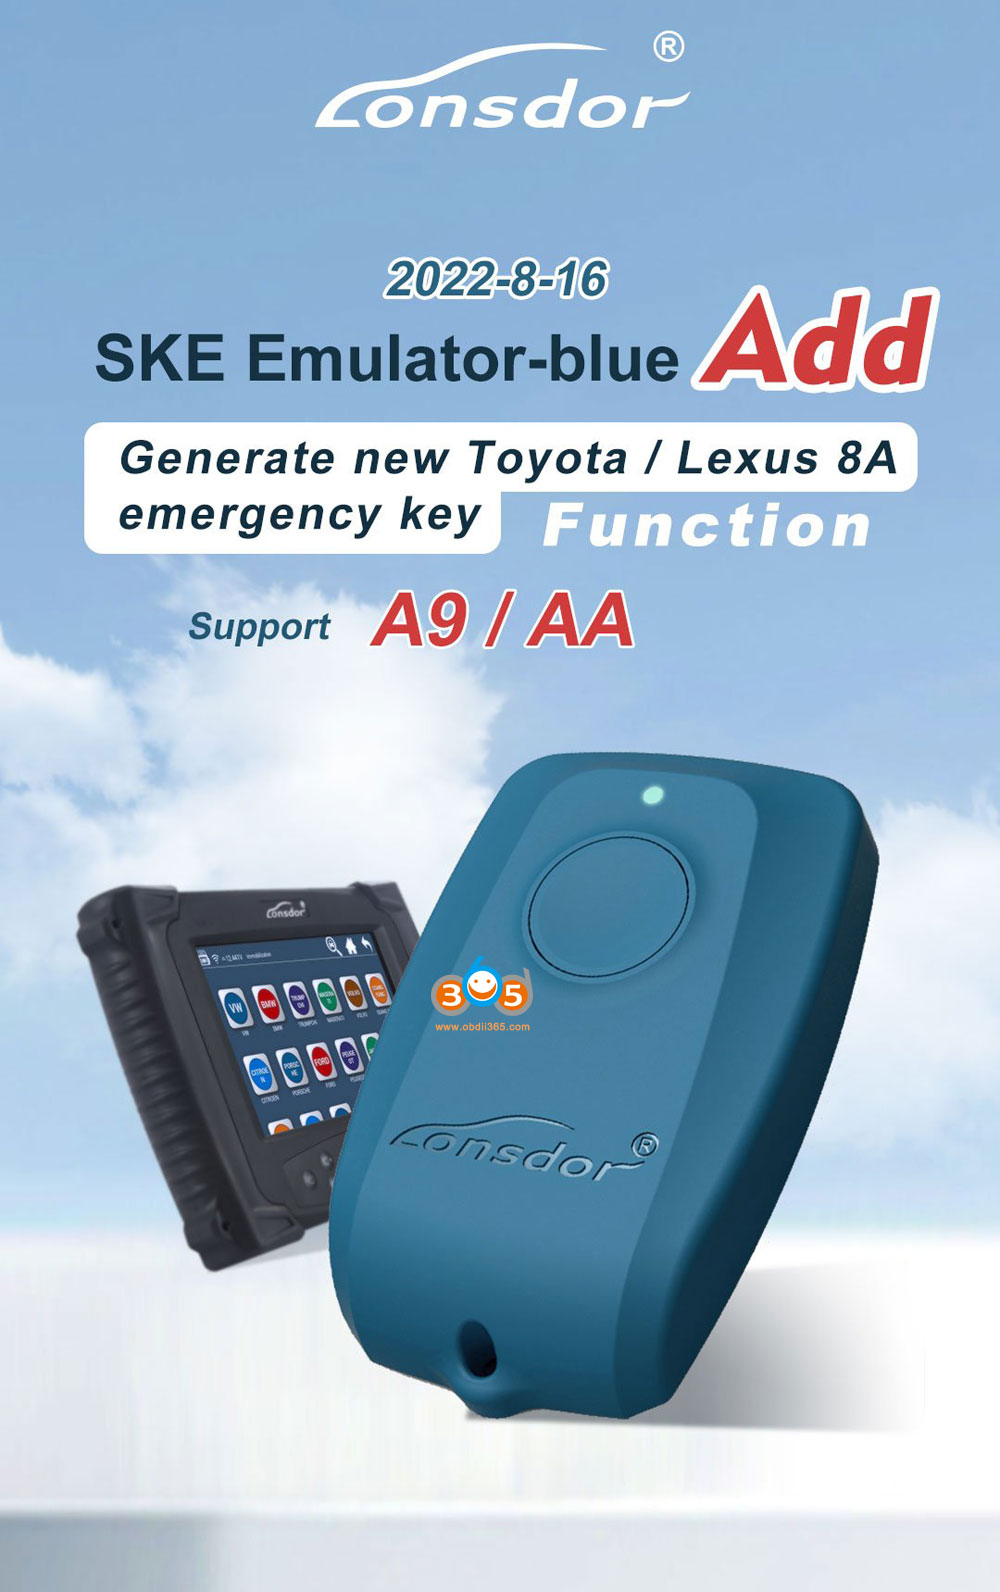 lonsdor-ske-emulator-adds-a9-aa